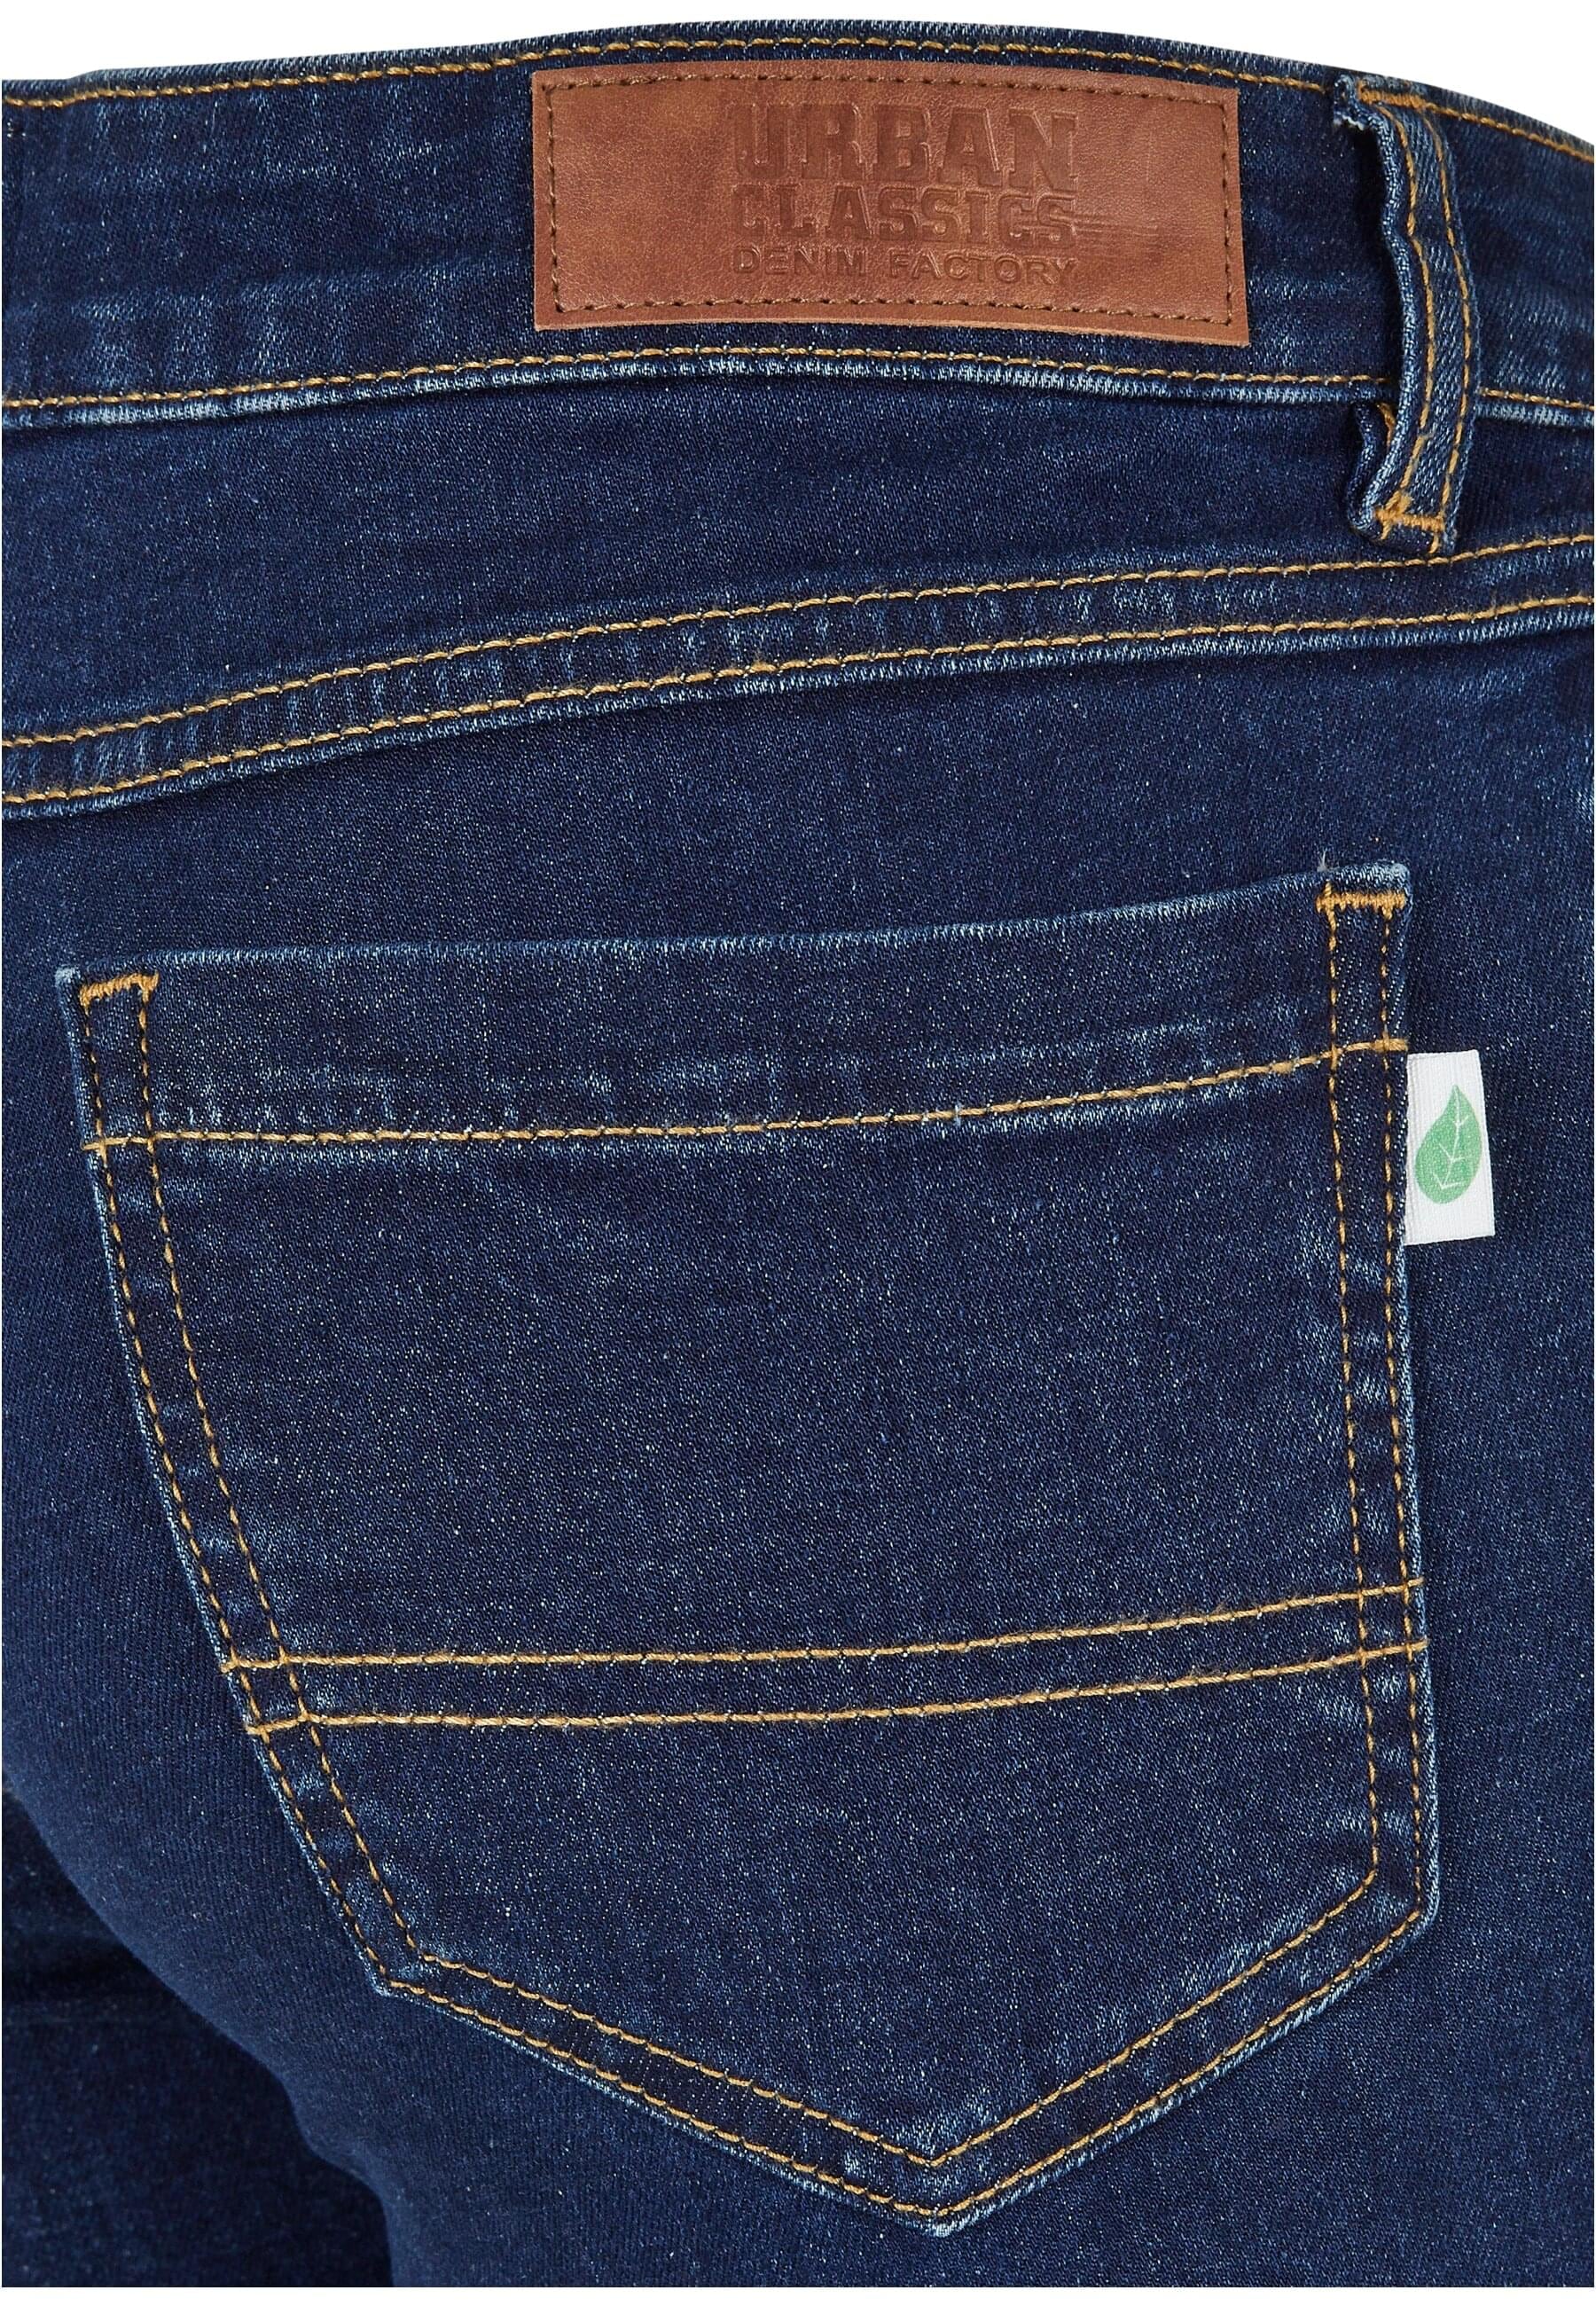 URBAN CLASSICS Bequeme Jeans »Urban Classics Damen Ladies Organic Low Waist Flared Denim«